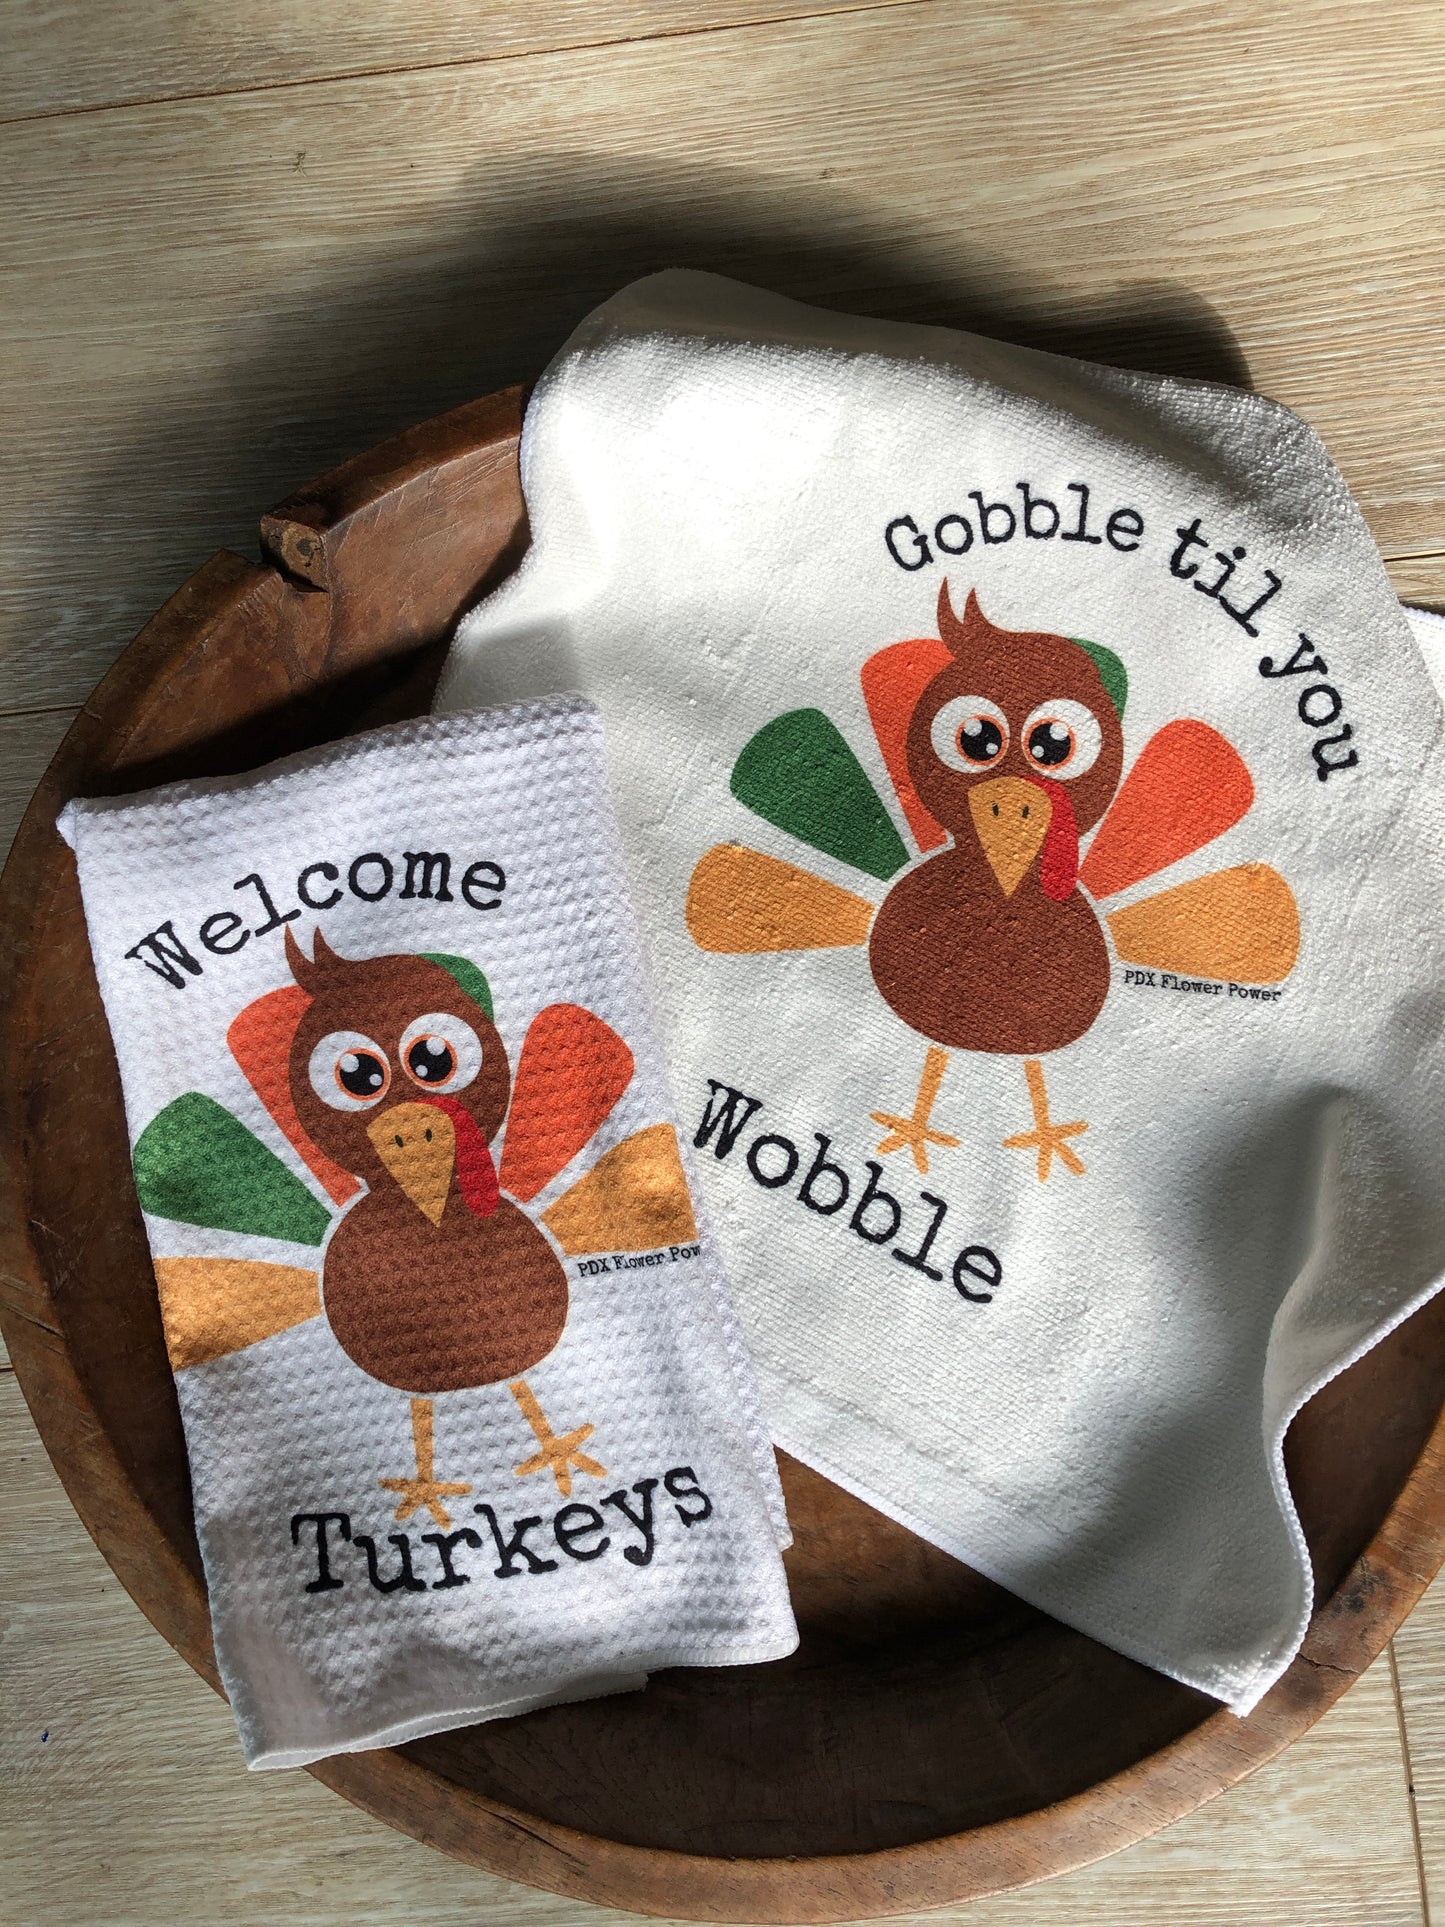 Welcome Turkeys, gobble till you wobble towel set. Fun thanksgiving decor.